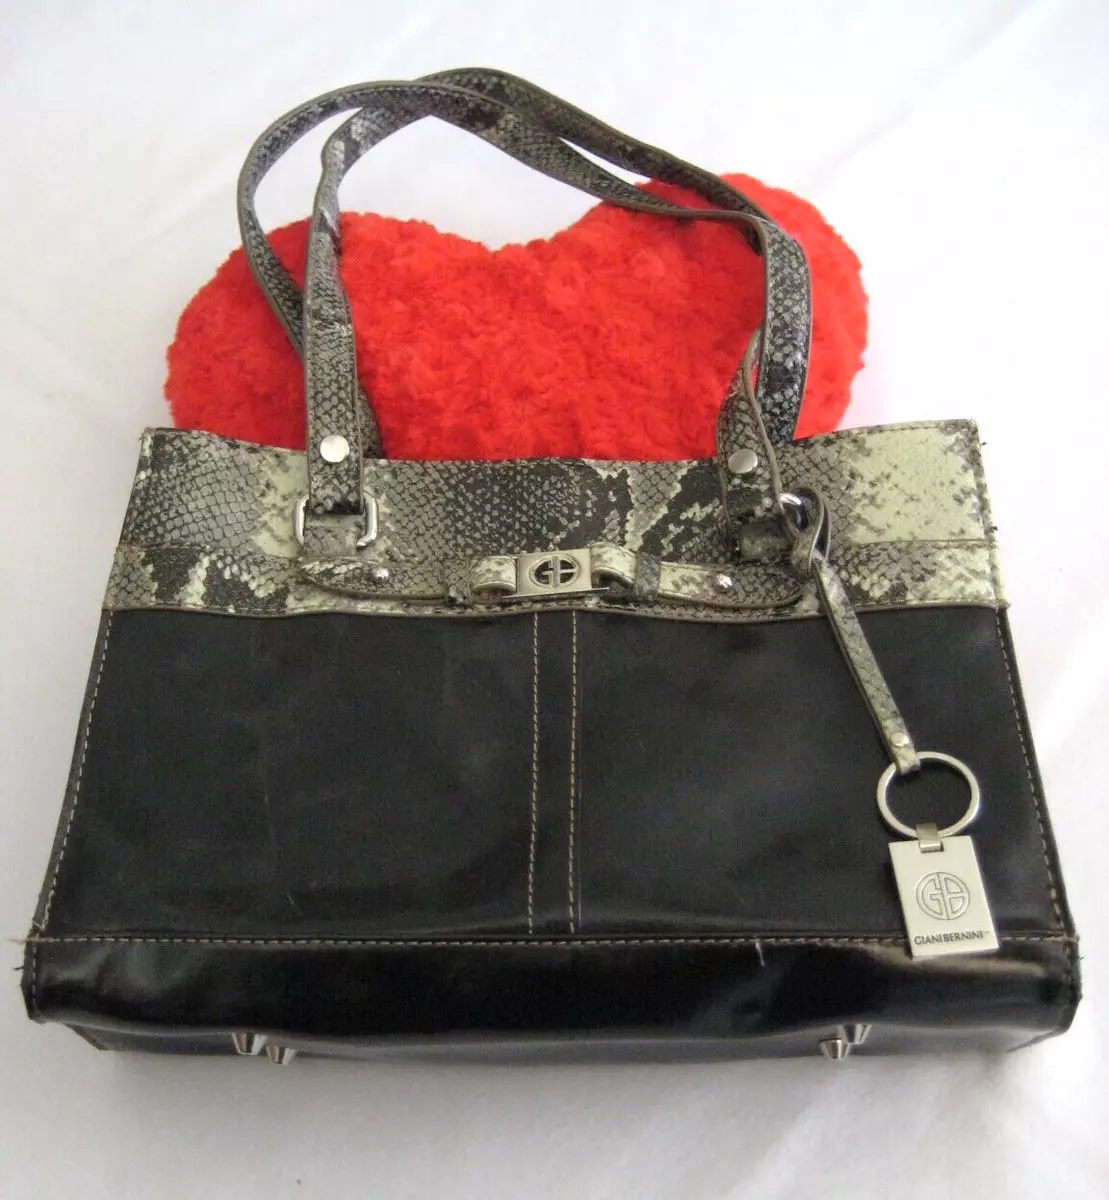 GIANI BERNINI Black Leather CROSSBODY Bag Purse | eBay